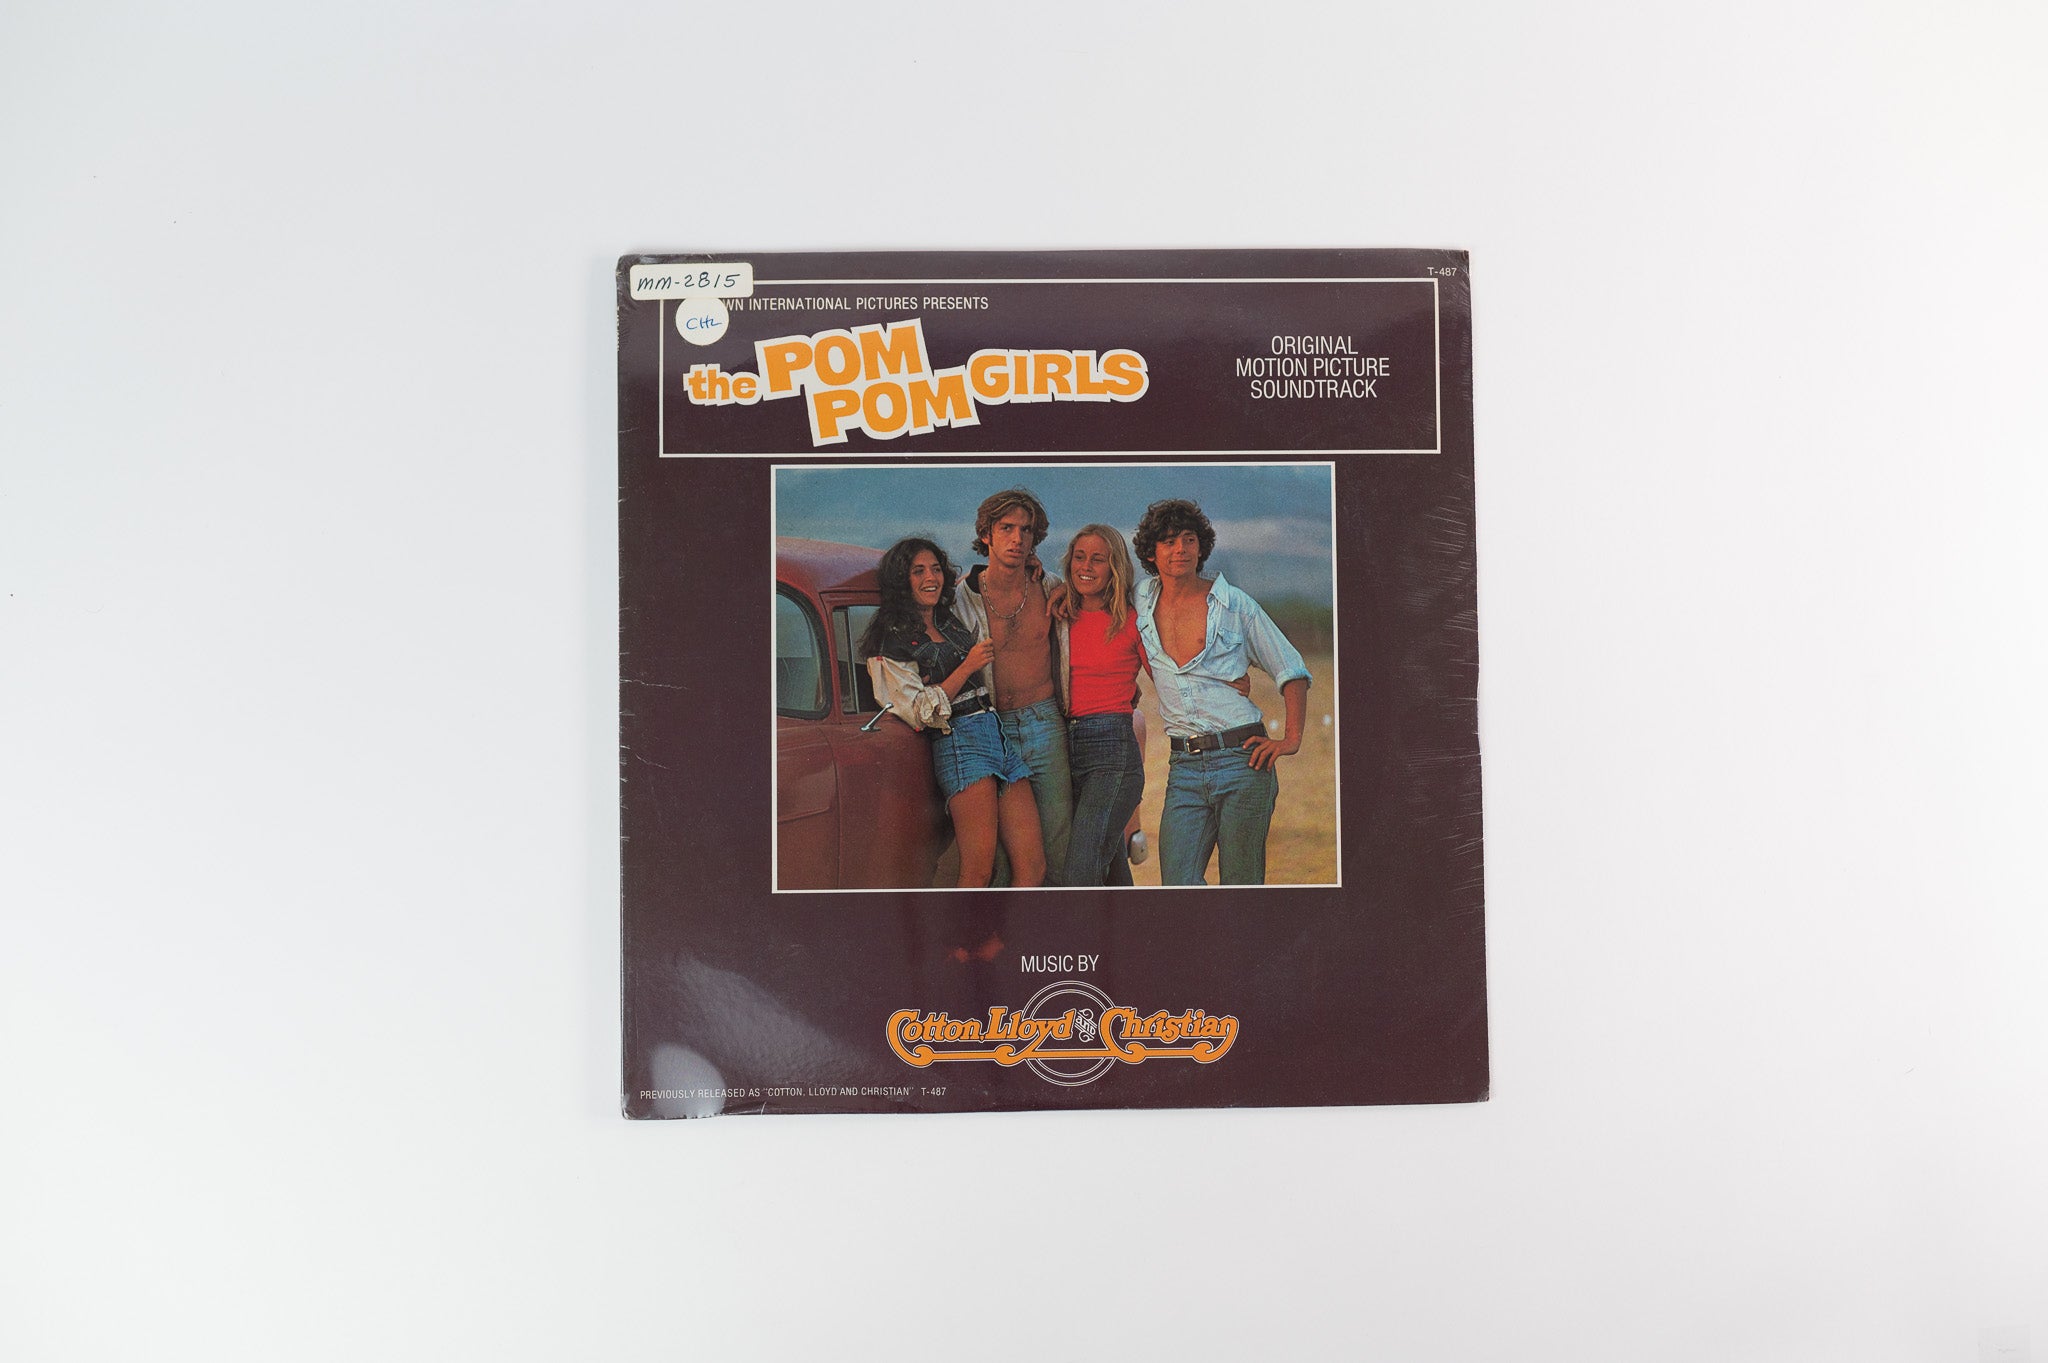 Cotton, Lloyd & Christian - The Pom Pom Girls Original Soundtrack on 20th Century Sealed